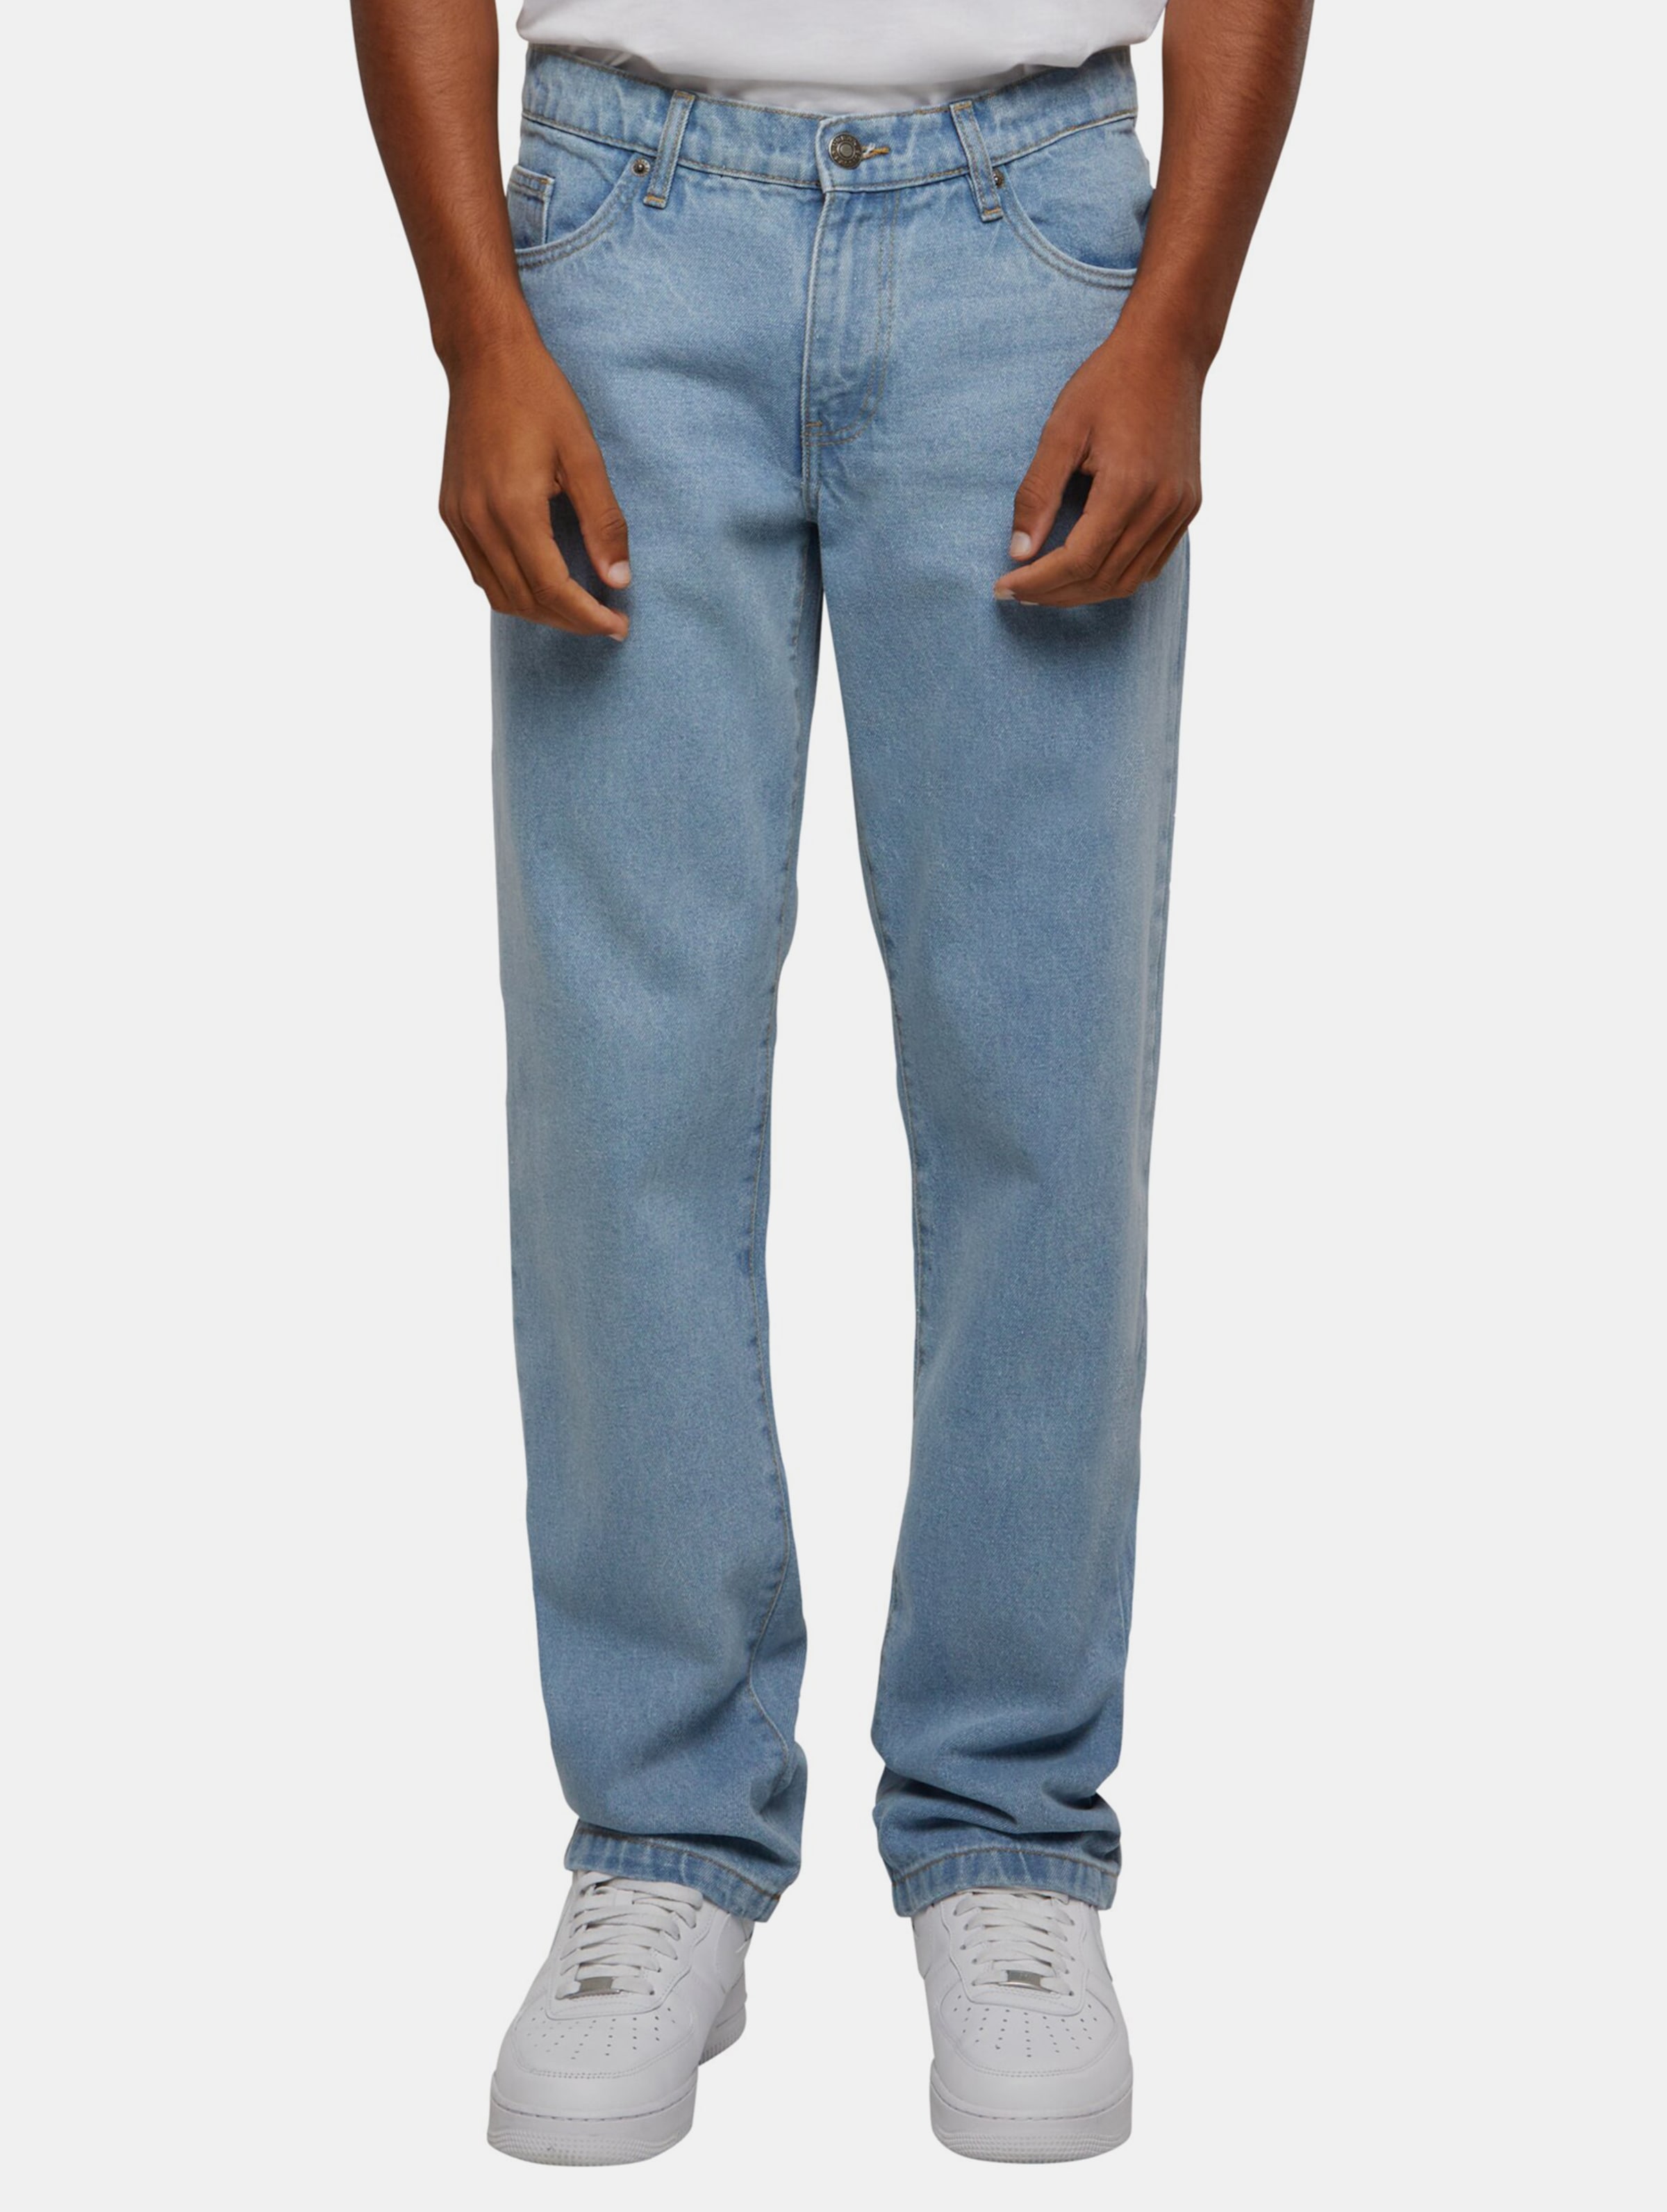 Urban Classics - Heavy Ounce Straight Fit Jeans Broek rechte pijpen - Taille, 34 inch - Blauw